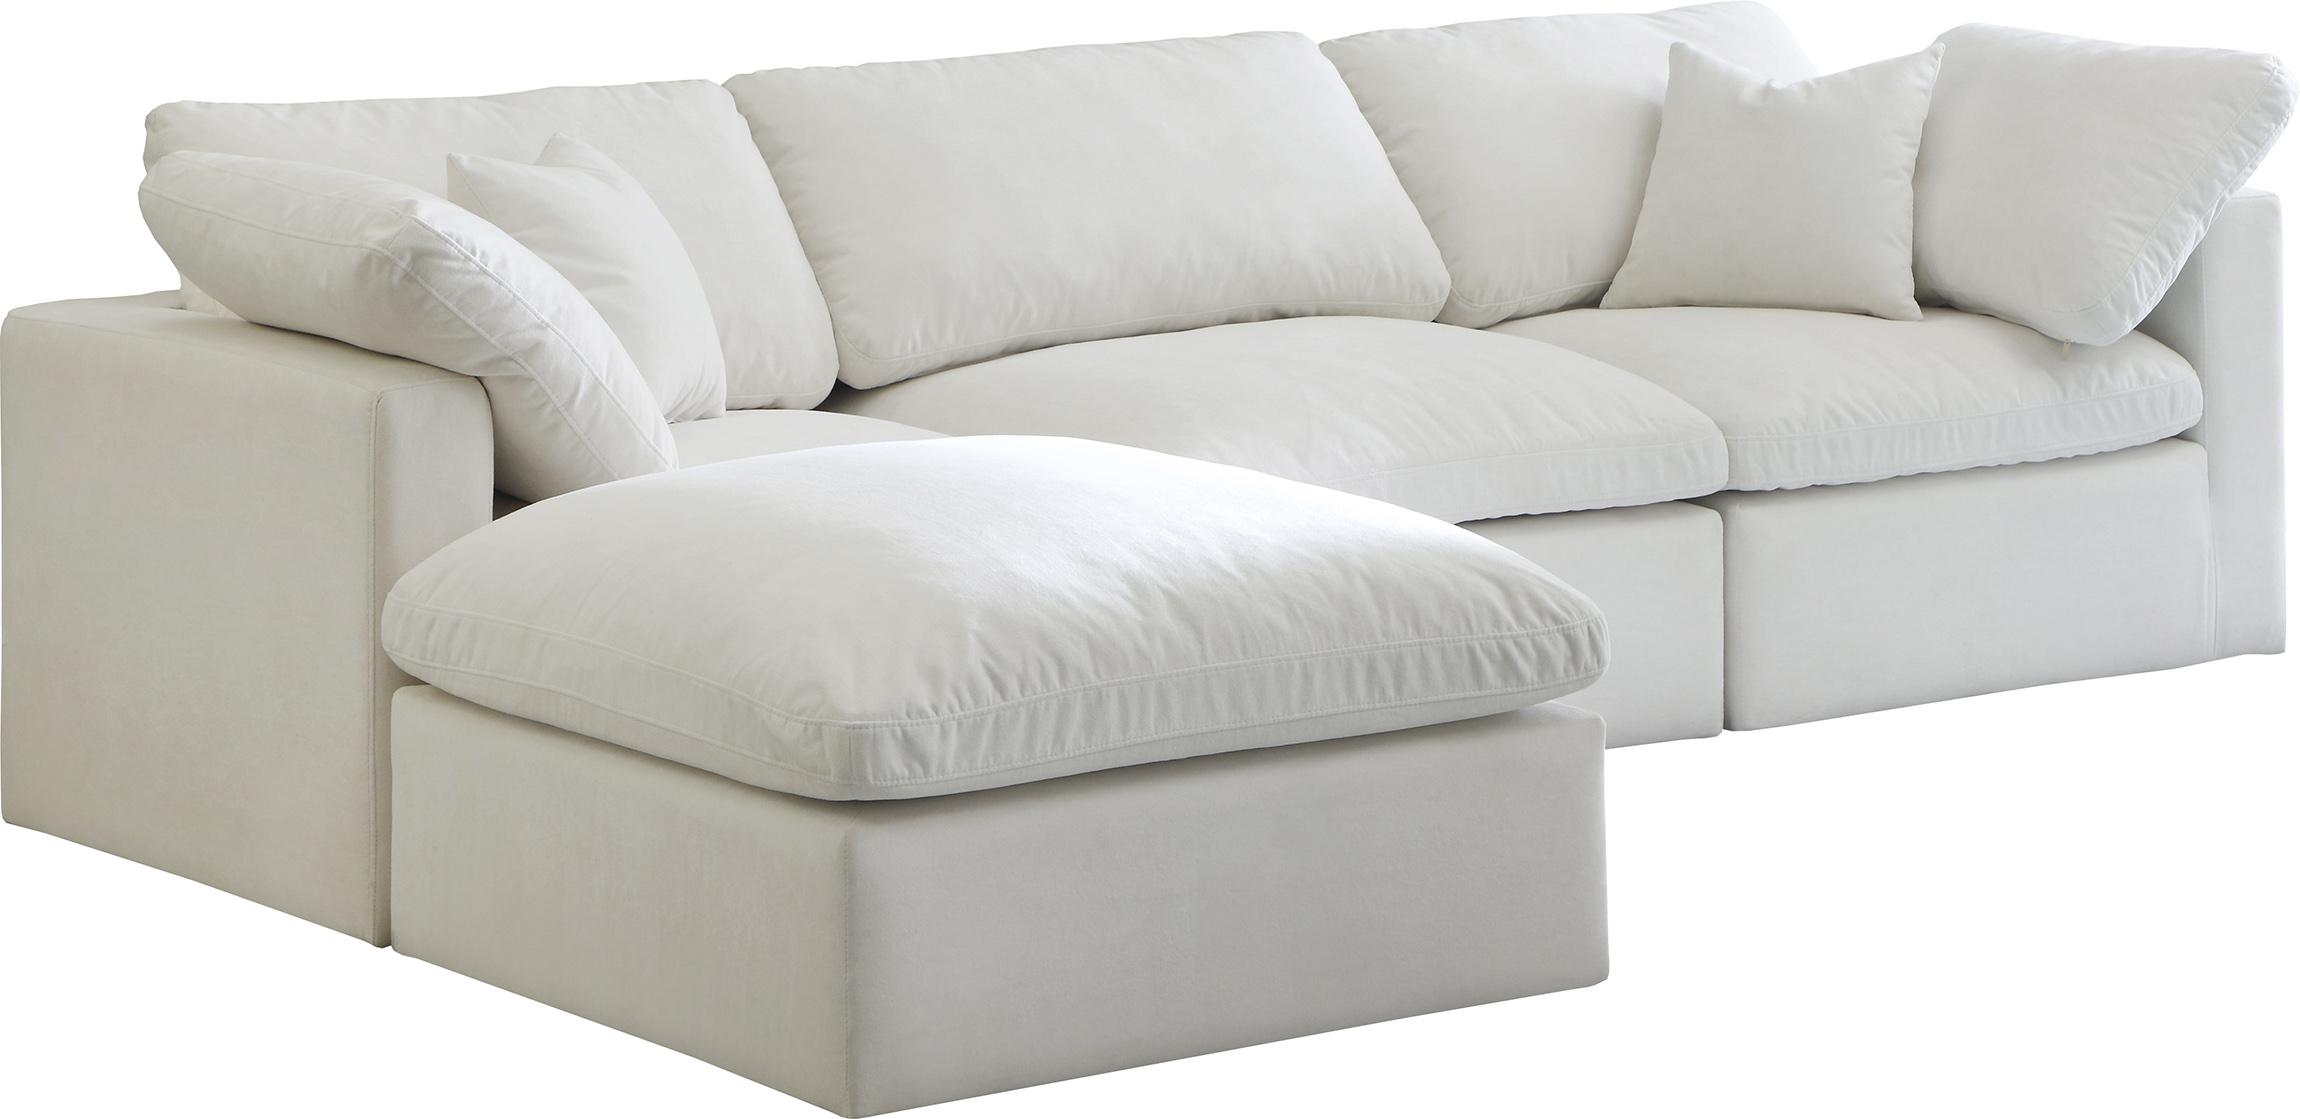 Contemporary, Modern Sectional Sofa 602Cream-Sec4A 602Cream-Sec4A in Cream Fabric